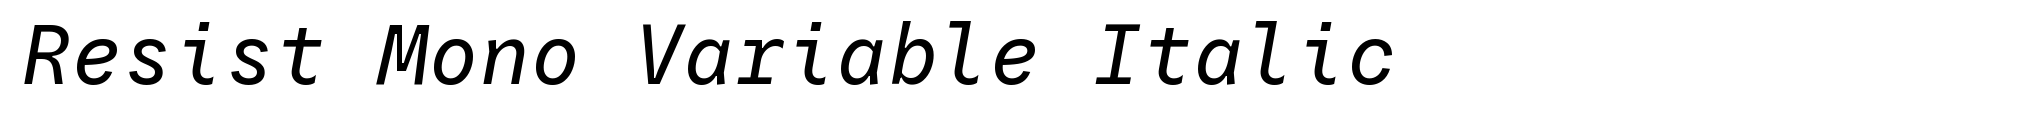 Resist Mono Variable Italic image